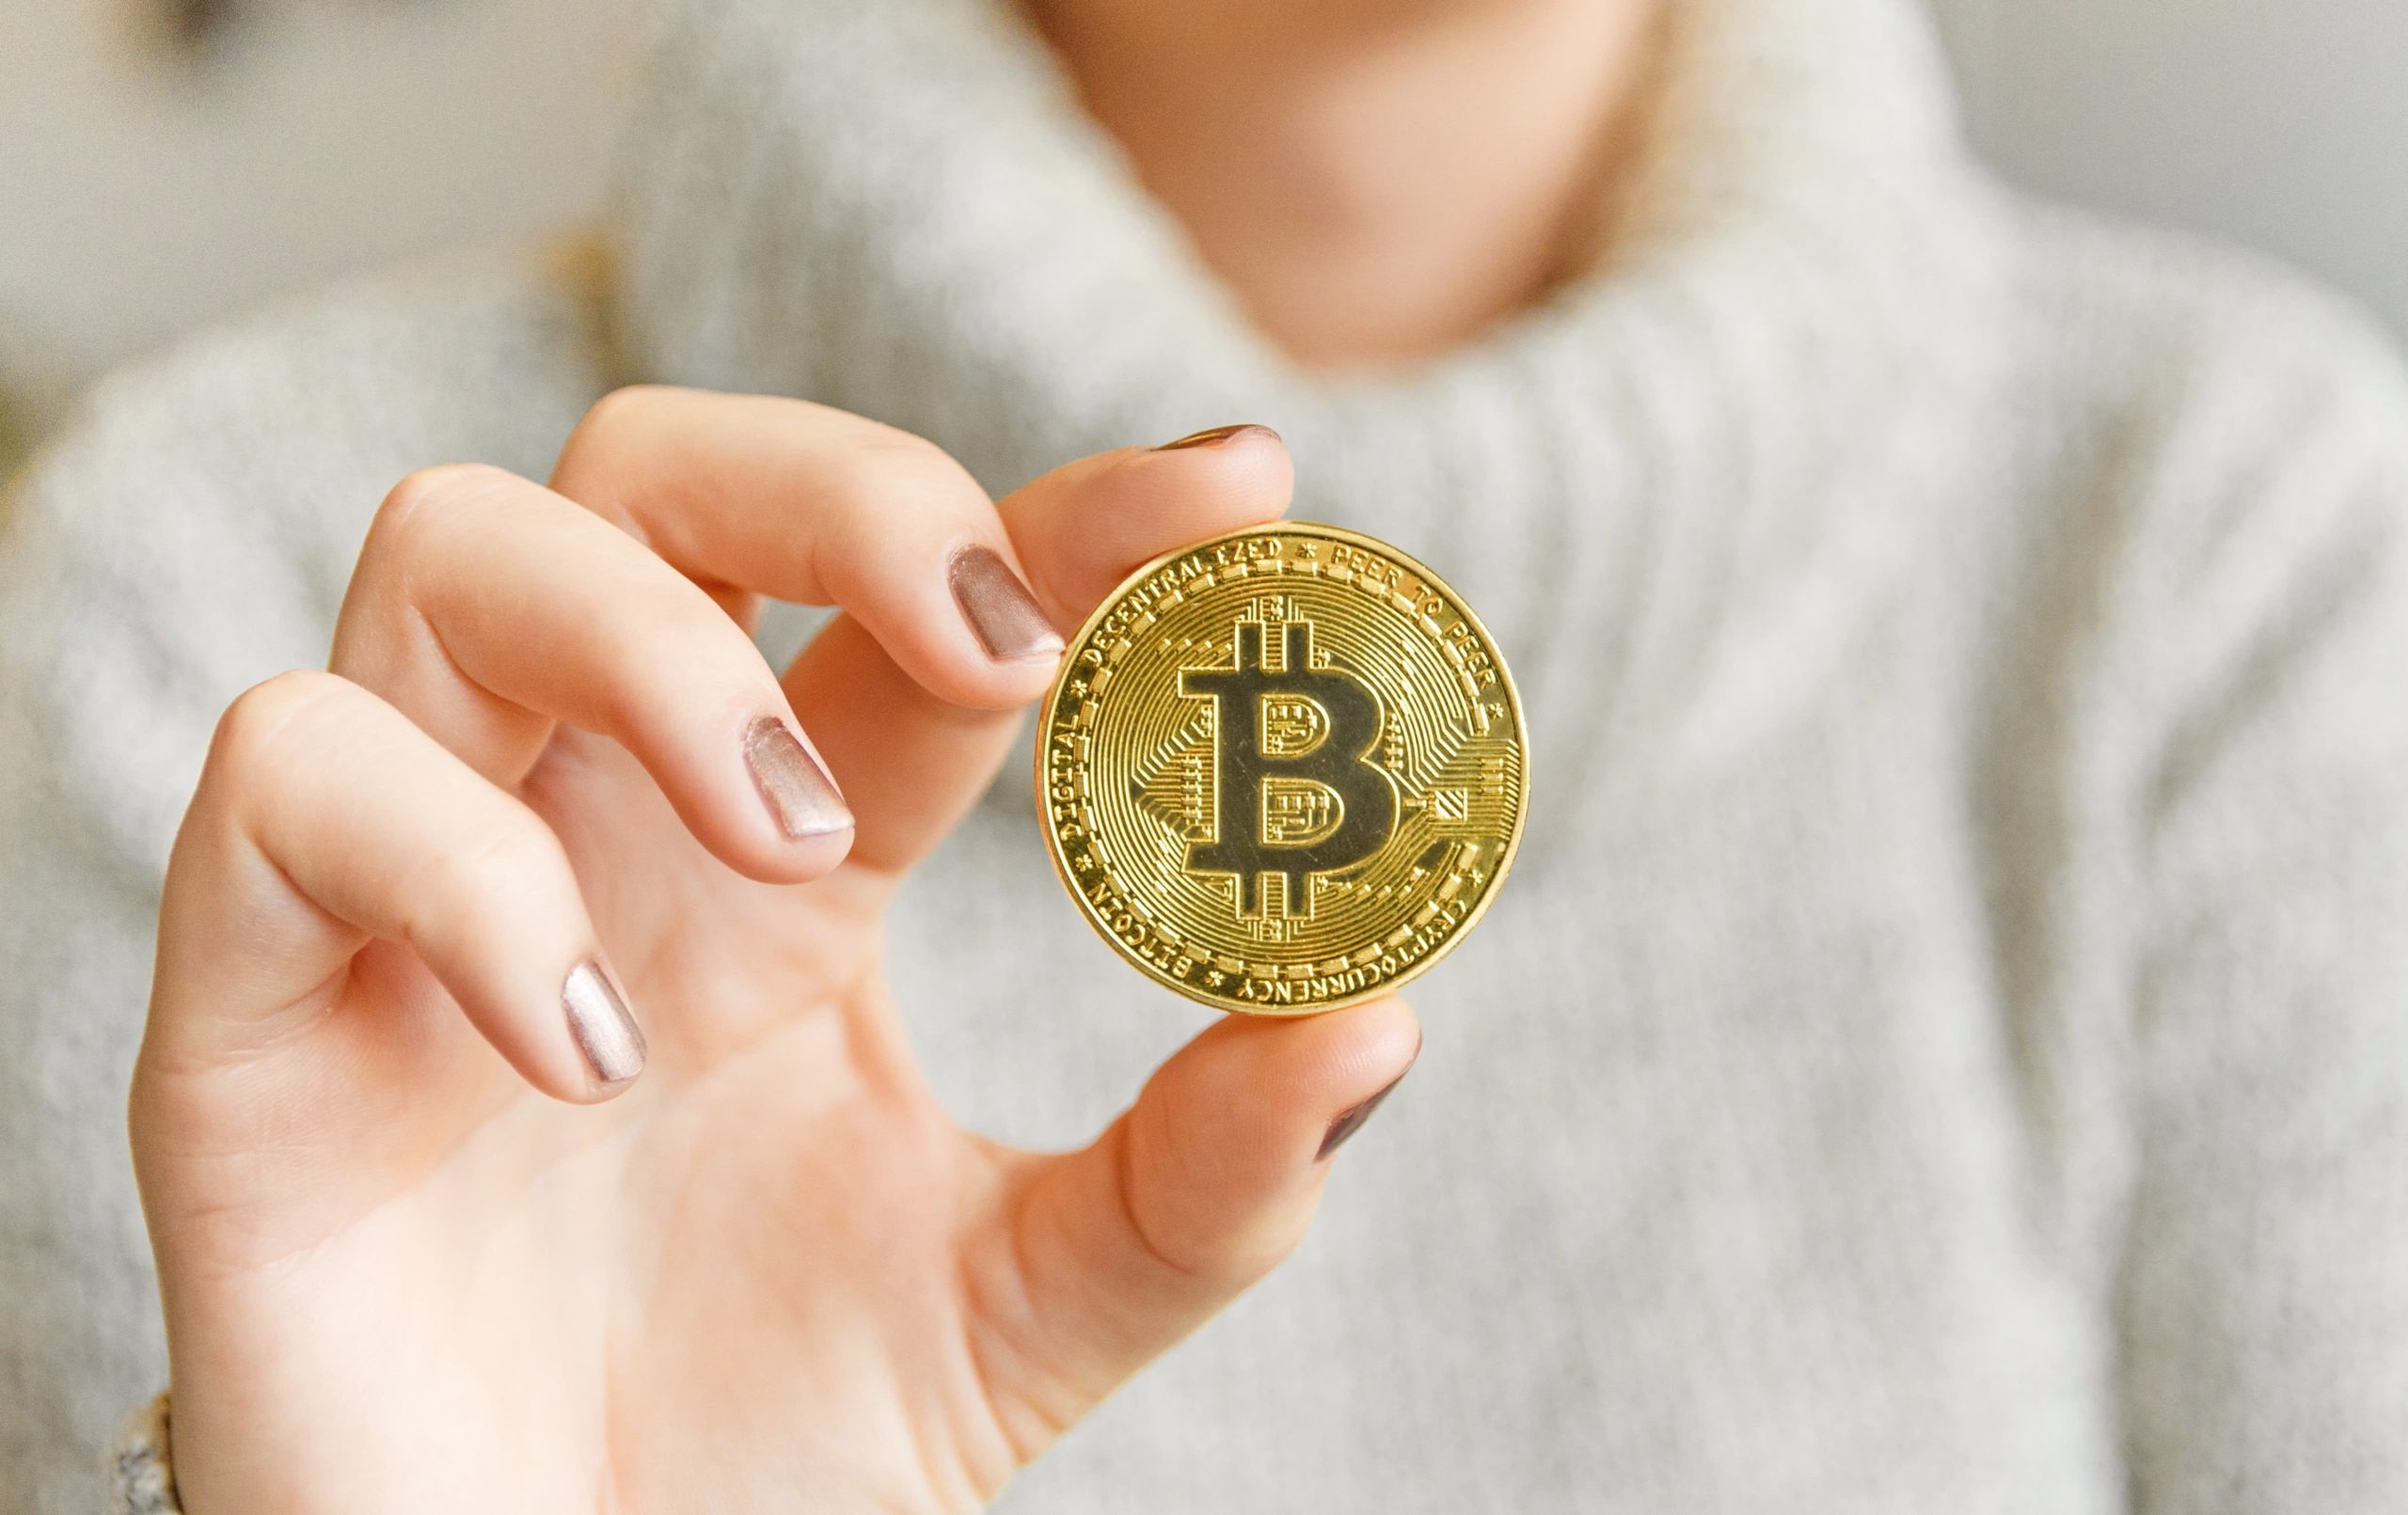 siųsti bitcoin su grynųjų pinigų programa